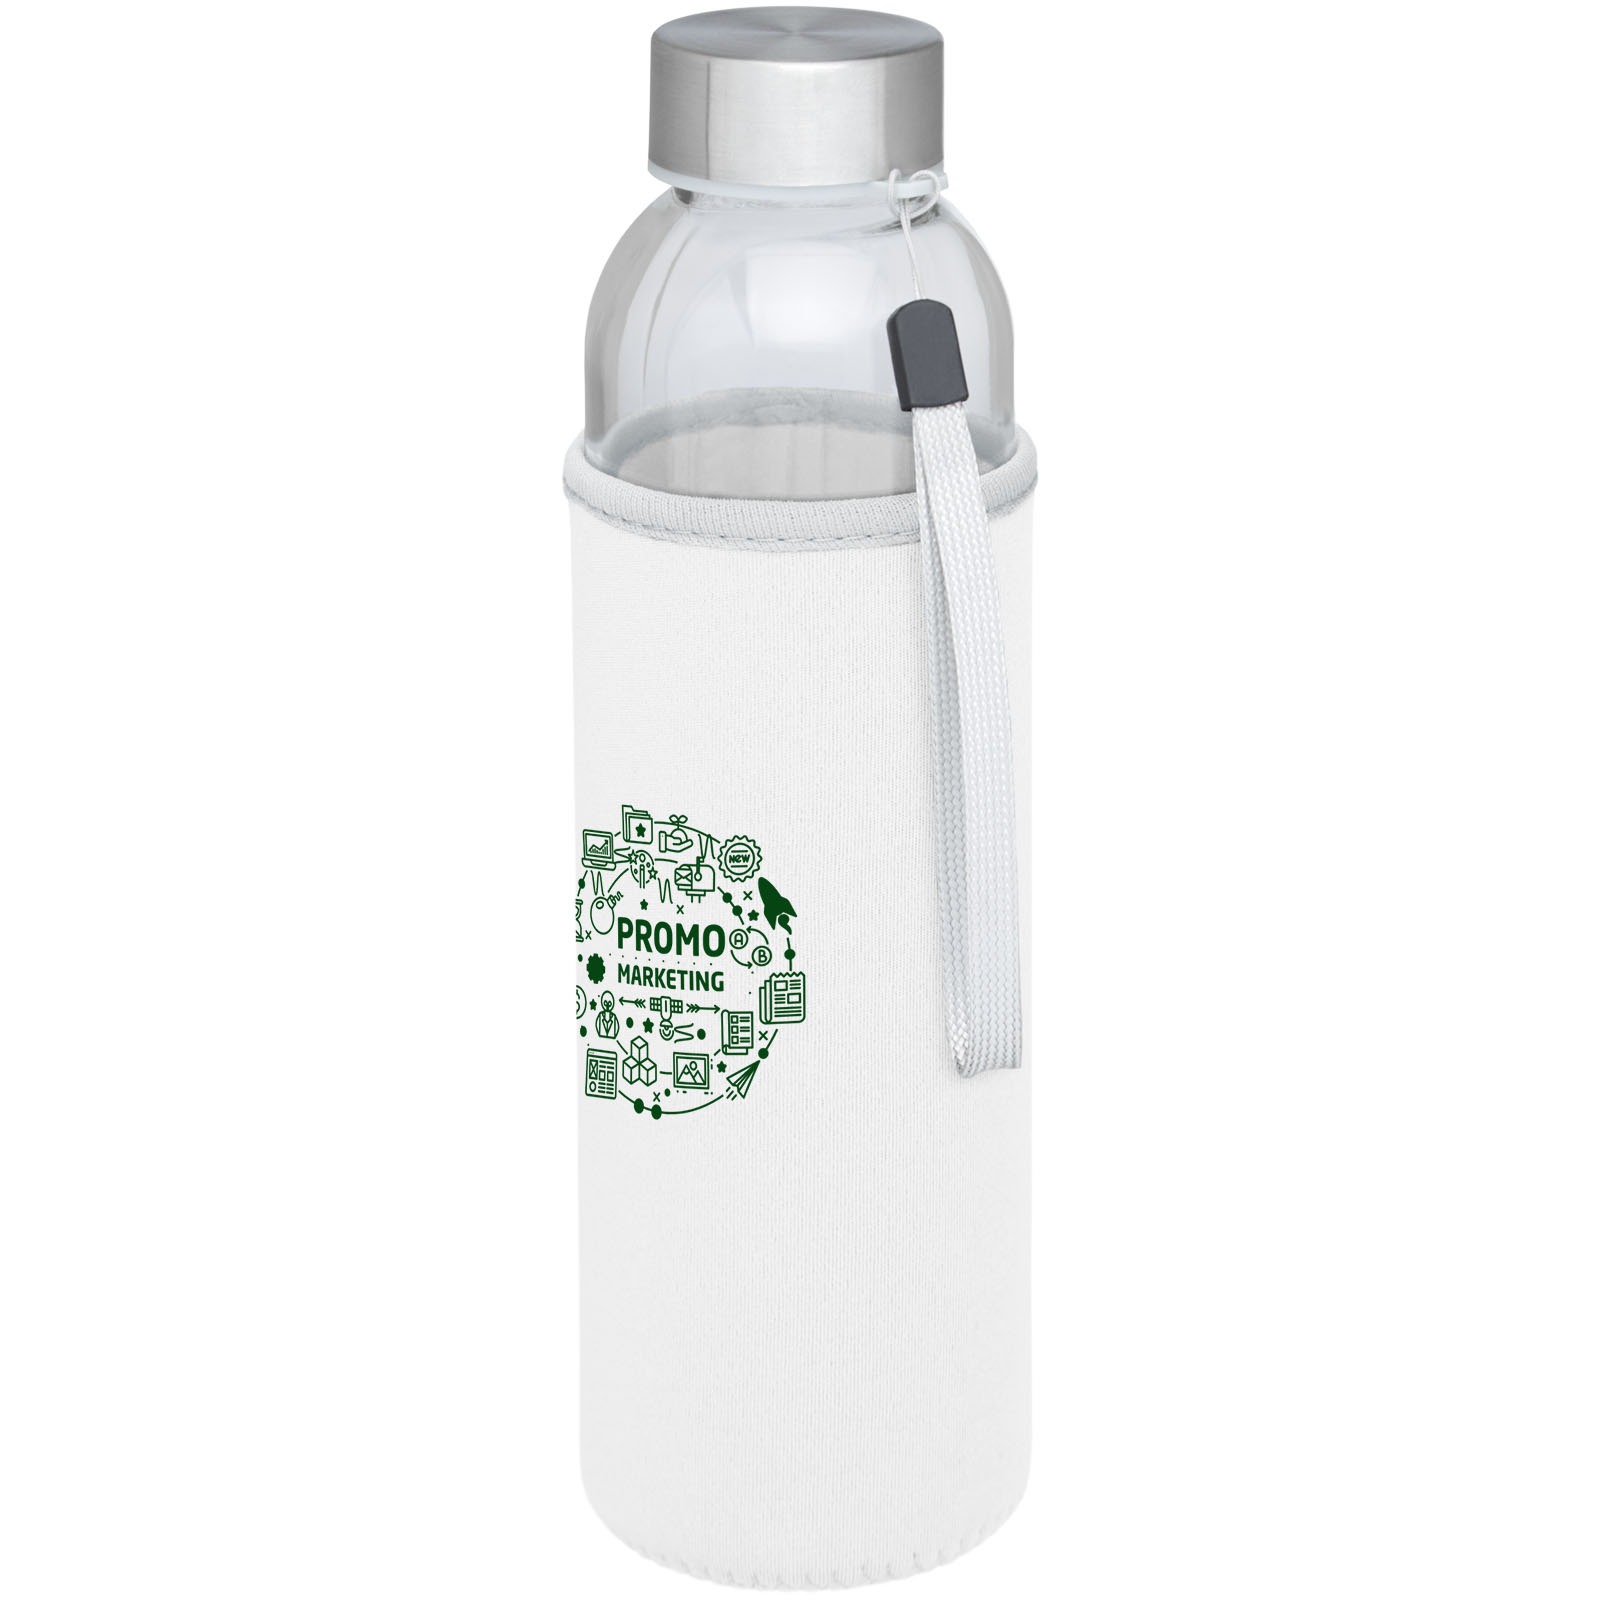 Bodhi 500 ml glass sport bottle - JSM Brand Exposure